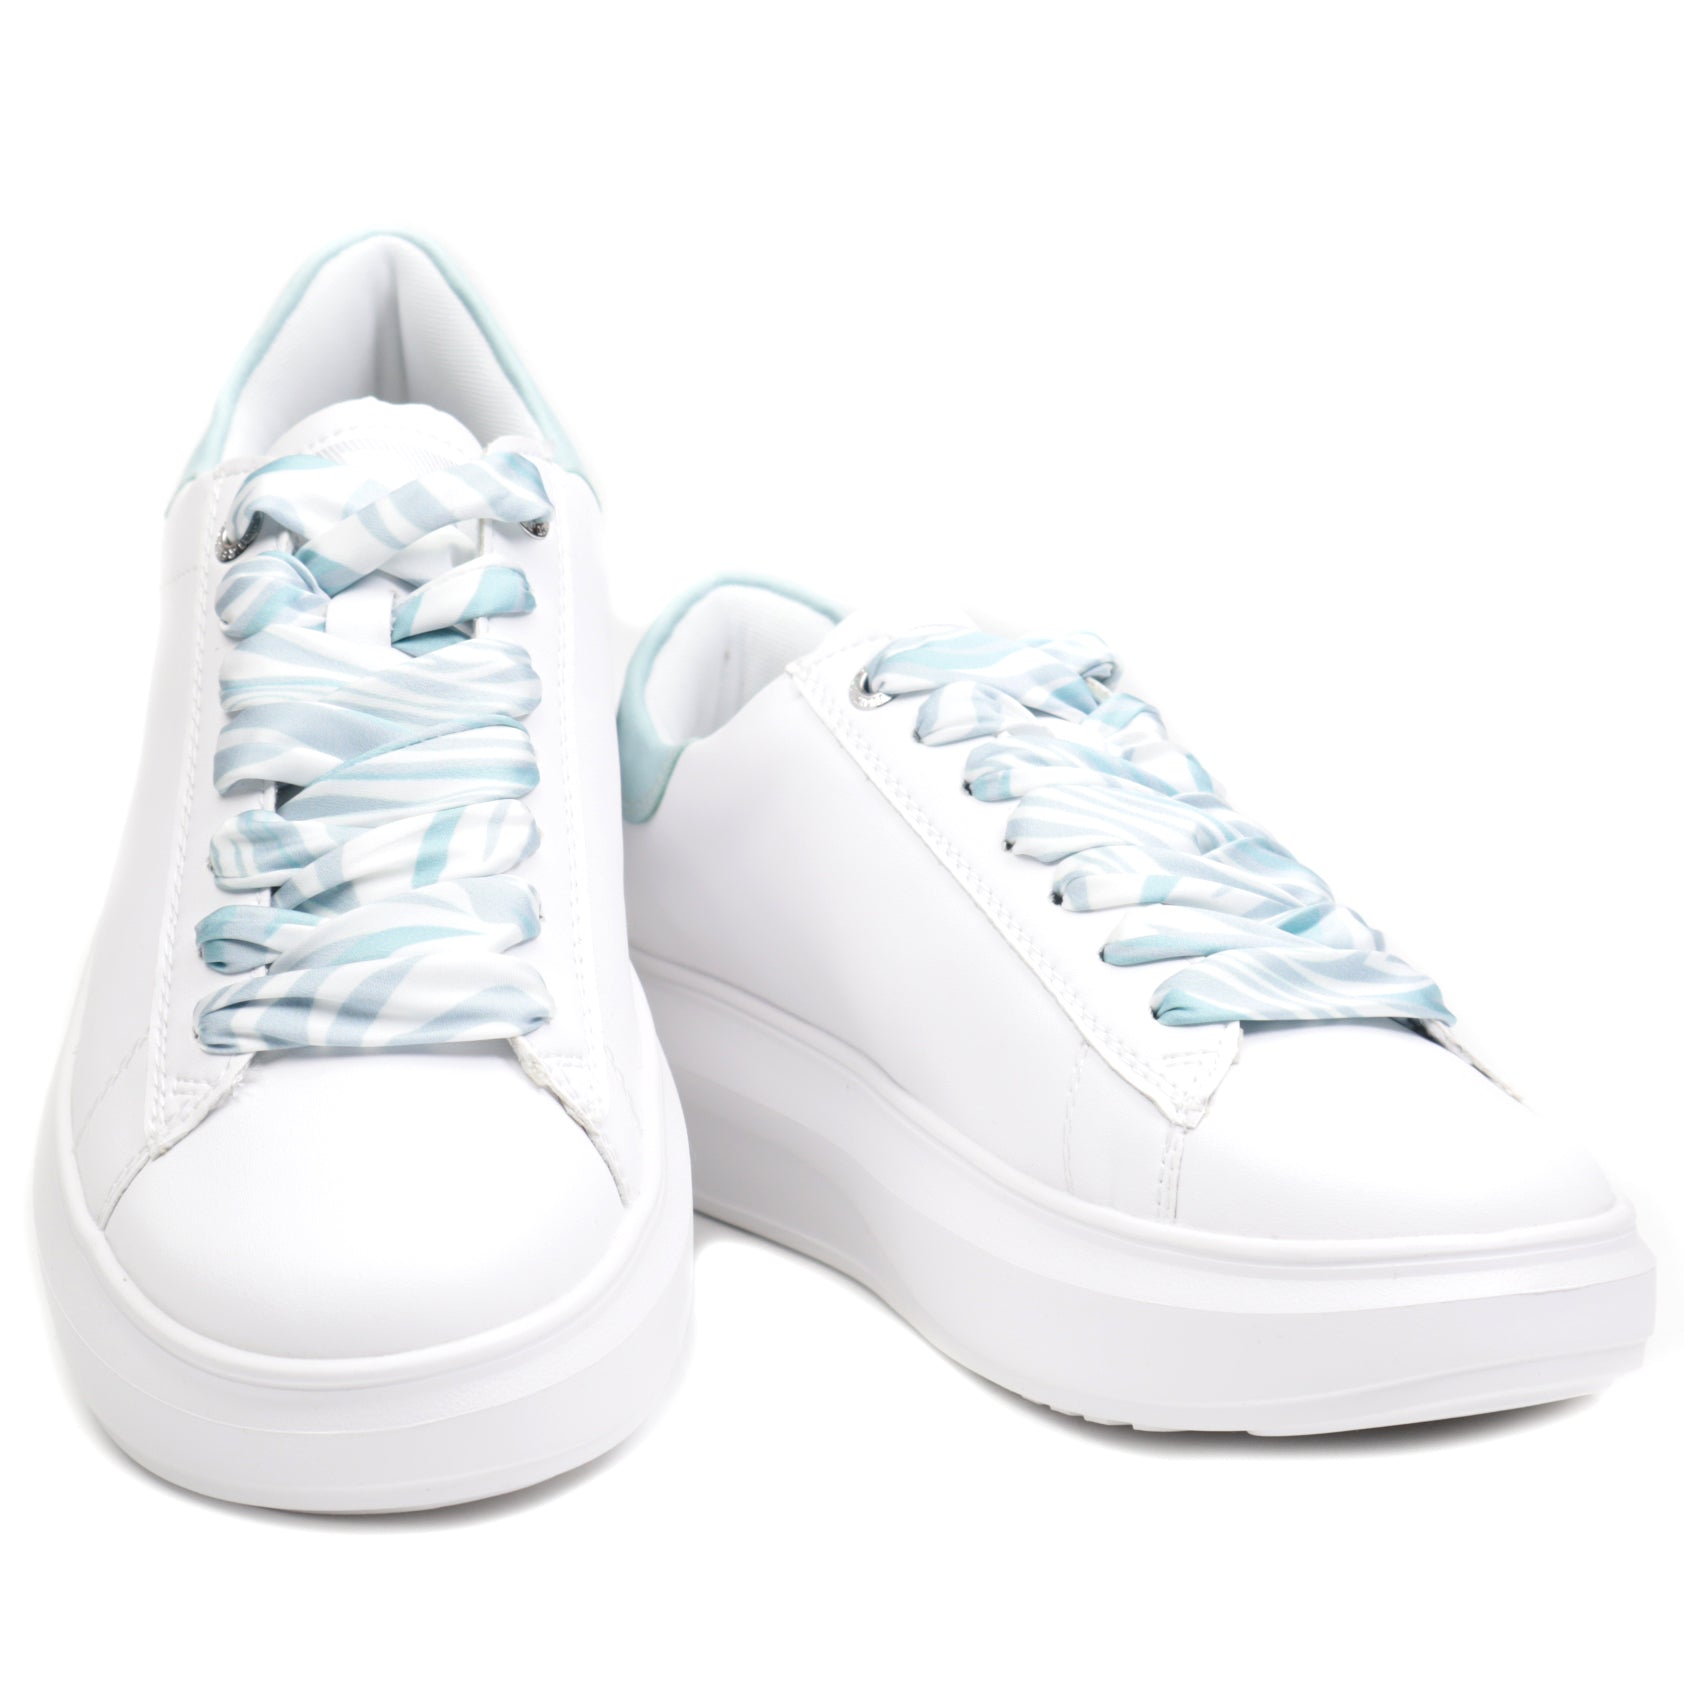 Rieker Sneakers dama W1201 81 alb+multicolor ID3856-ALB.MCL